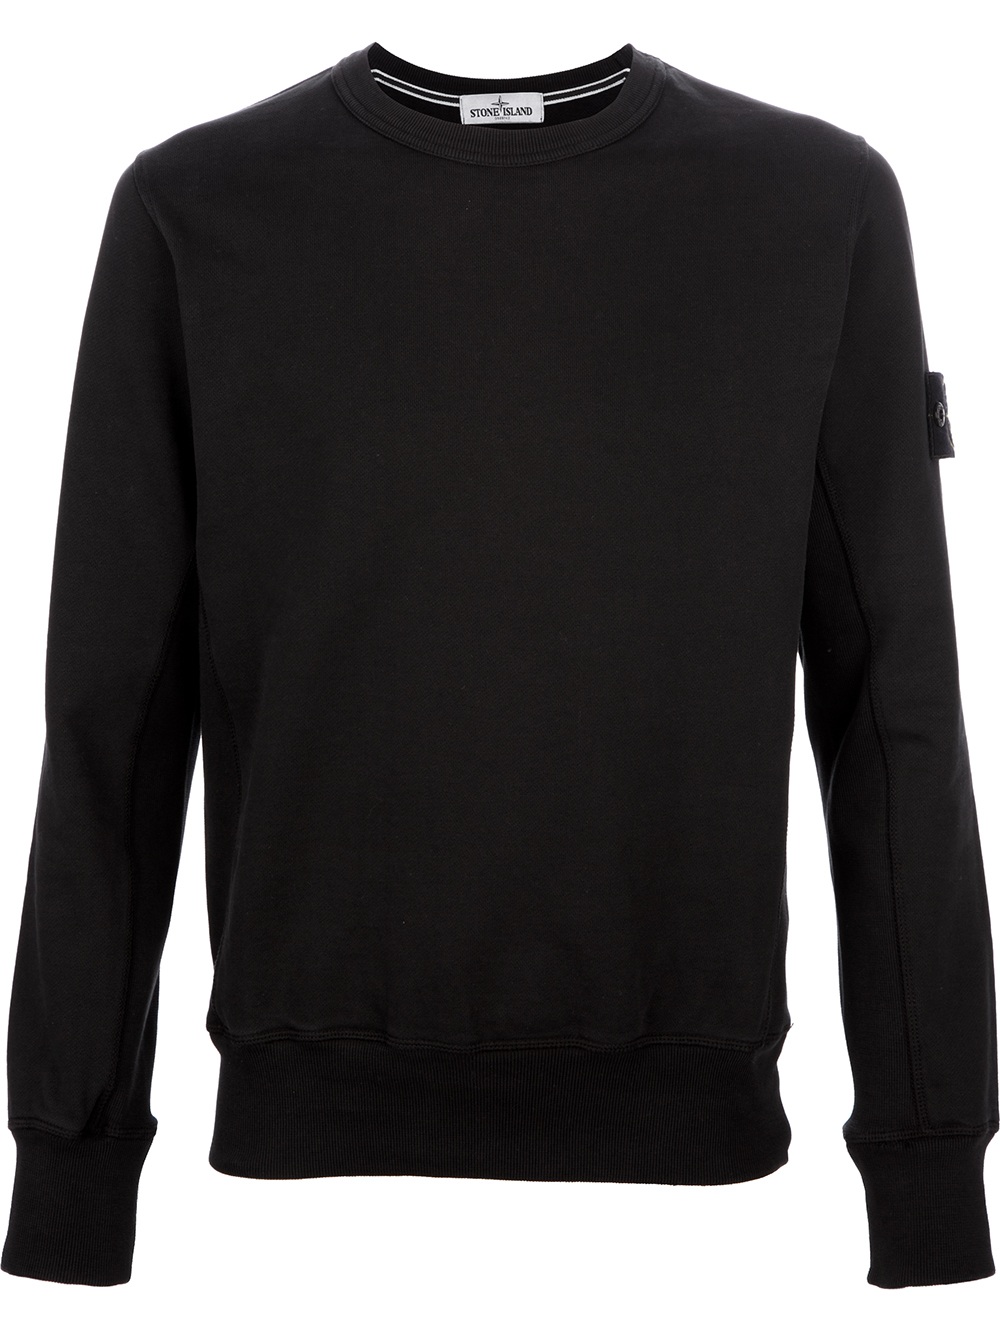 Stone Island Crew Neck Sweater in Black for Men - Lyst